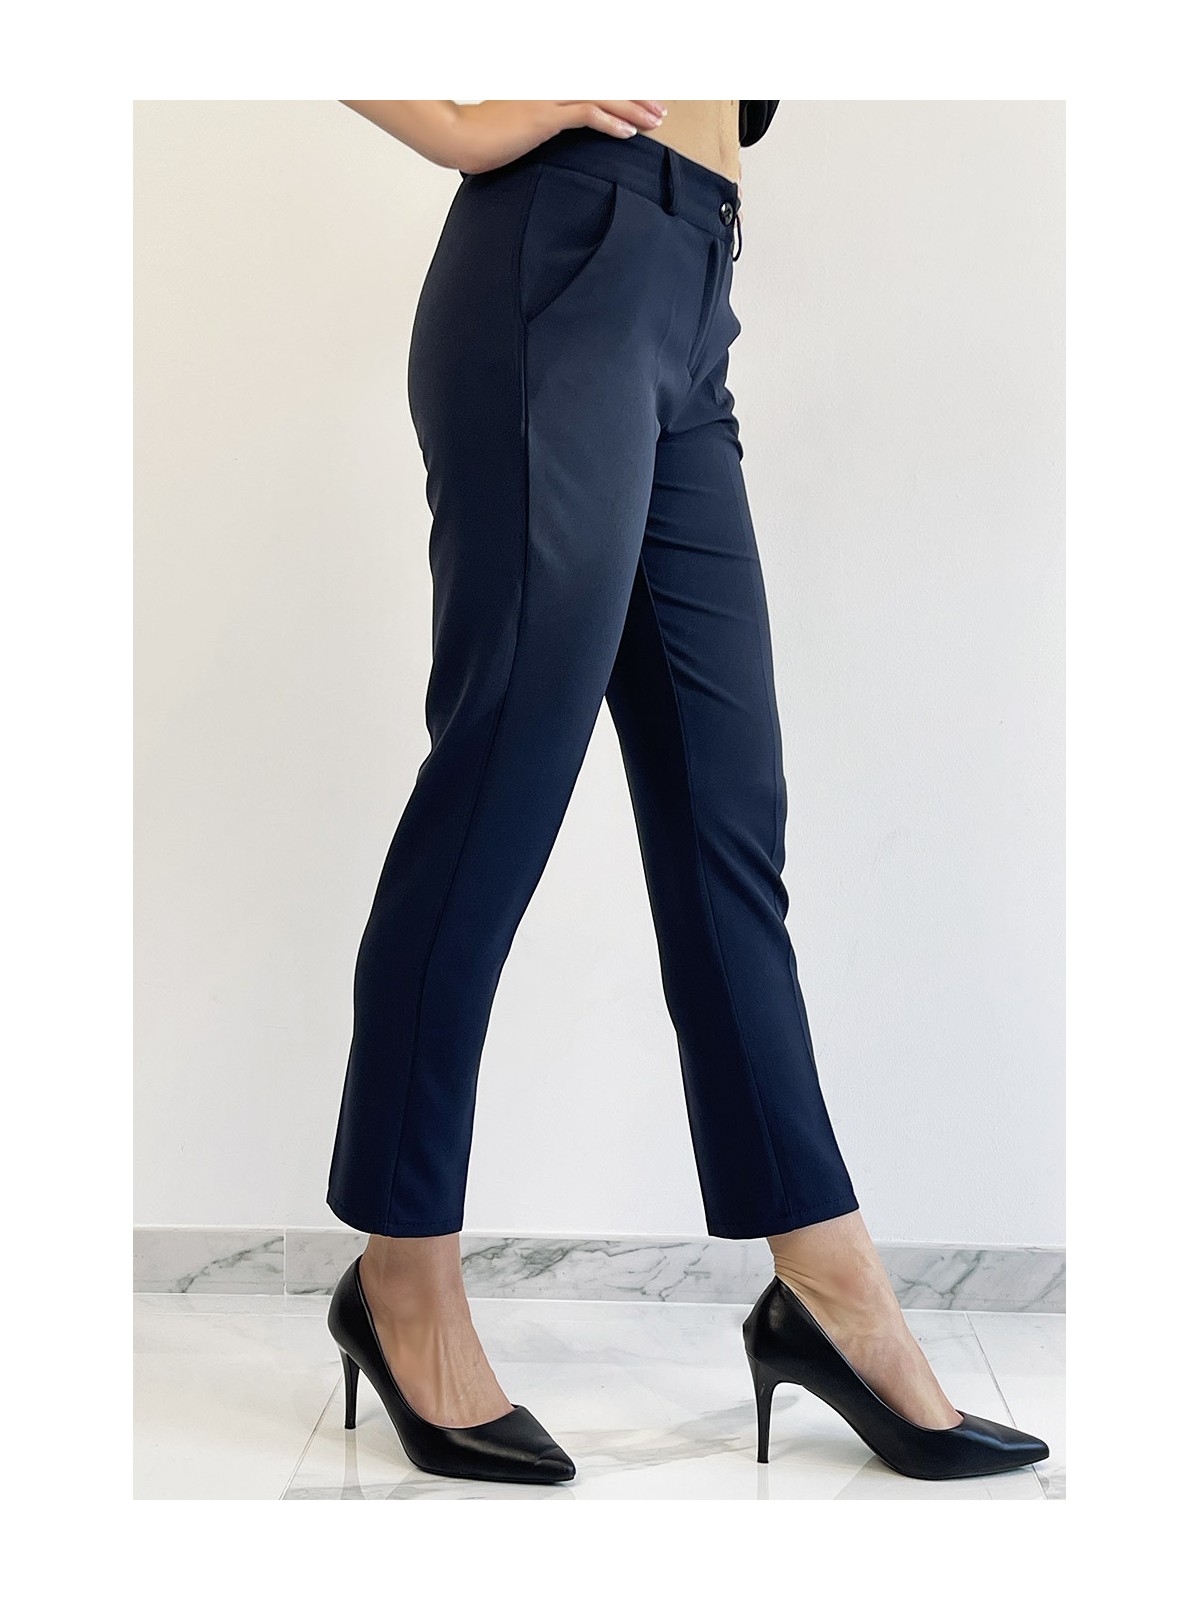 Pantalon slim marine avec poches style working girl - 5